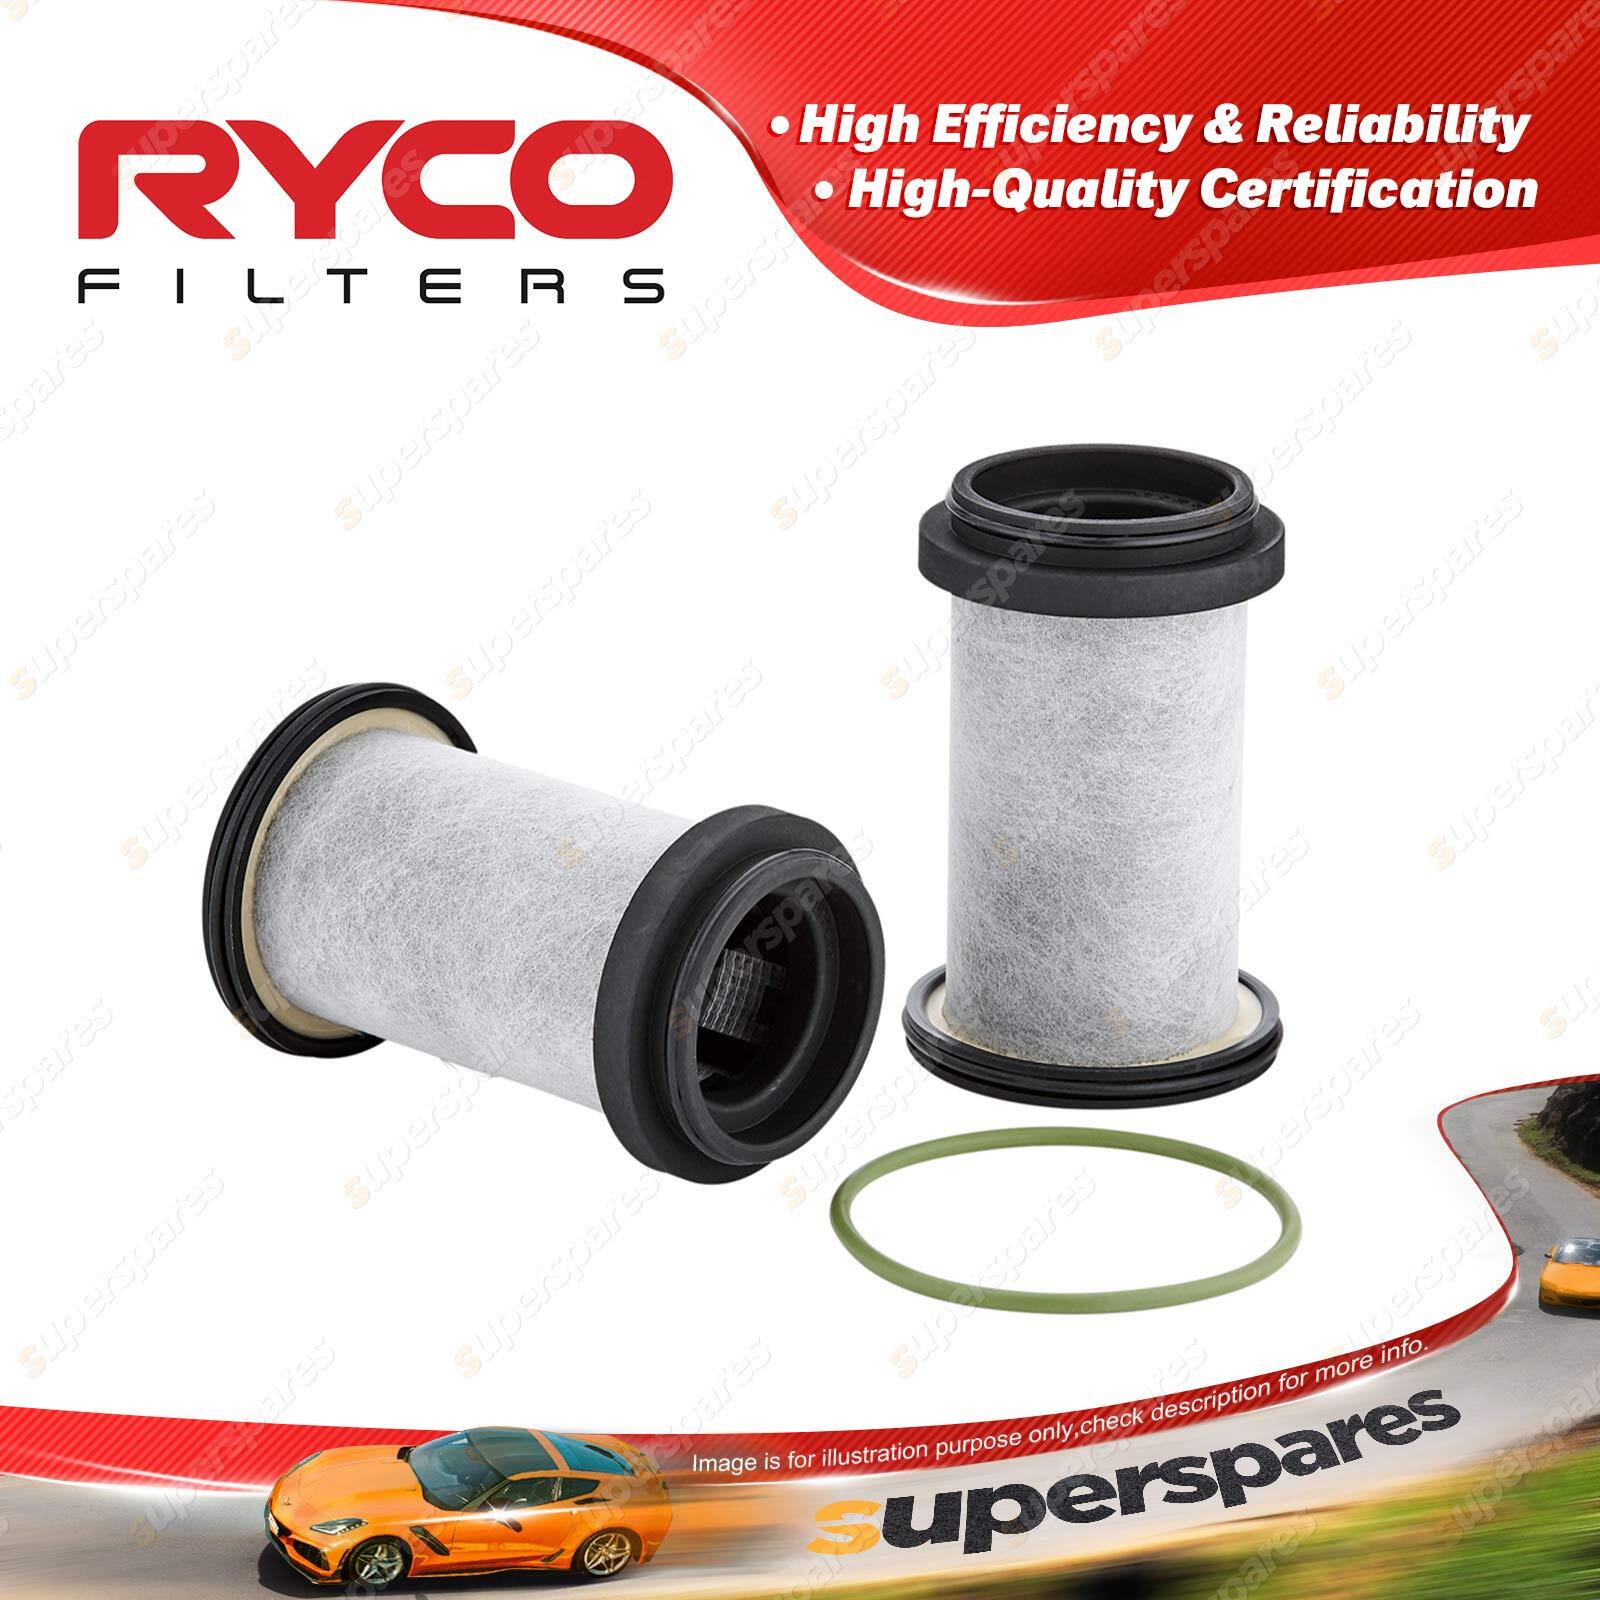 Ryco Universal Fuel Filter - Z4